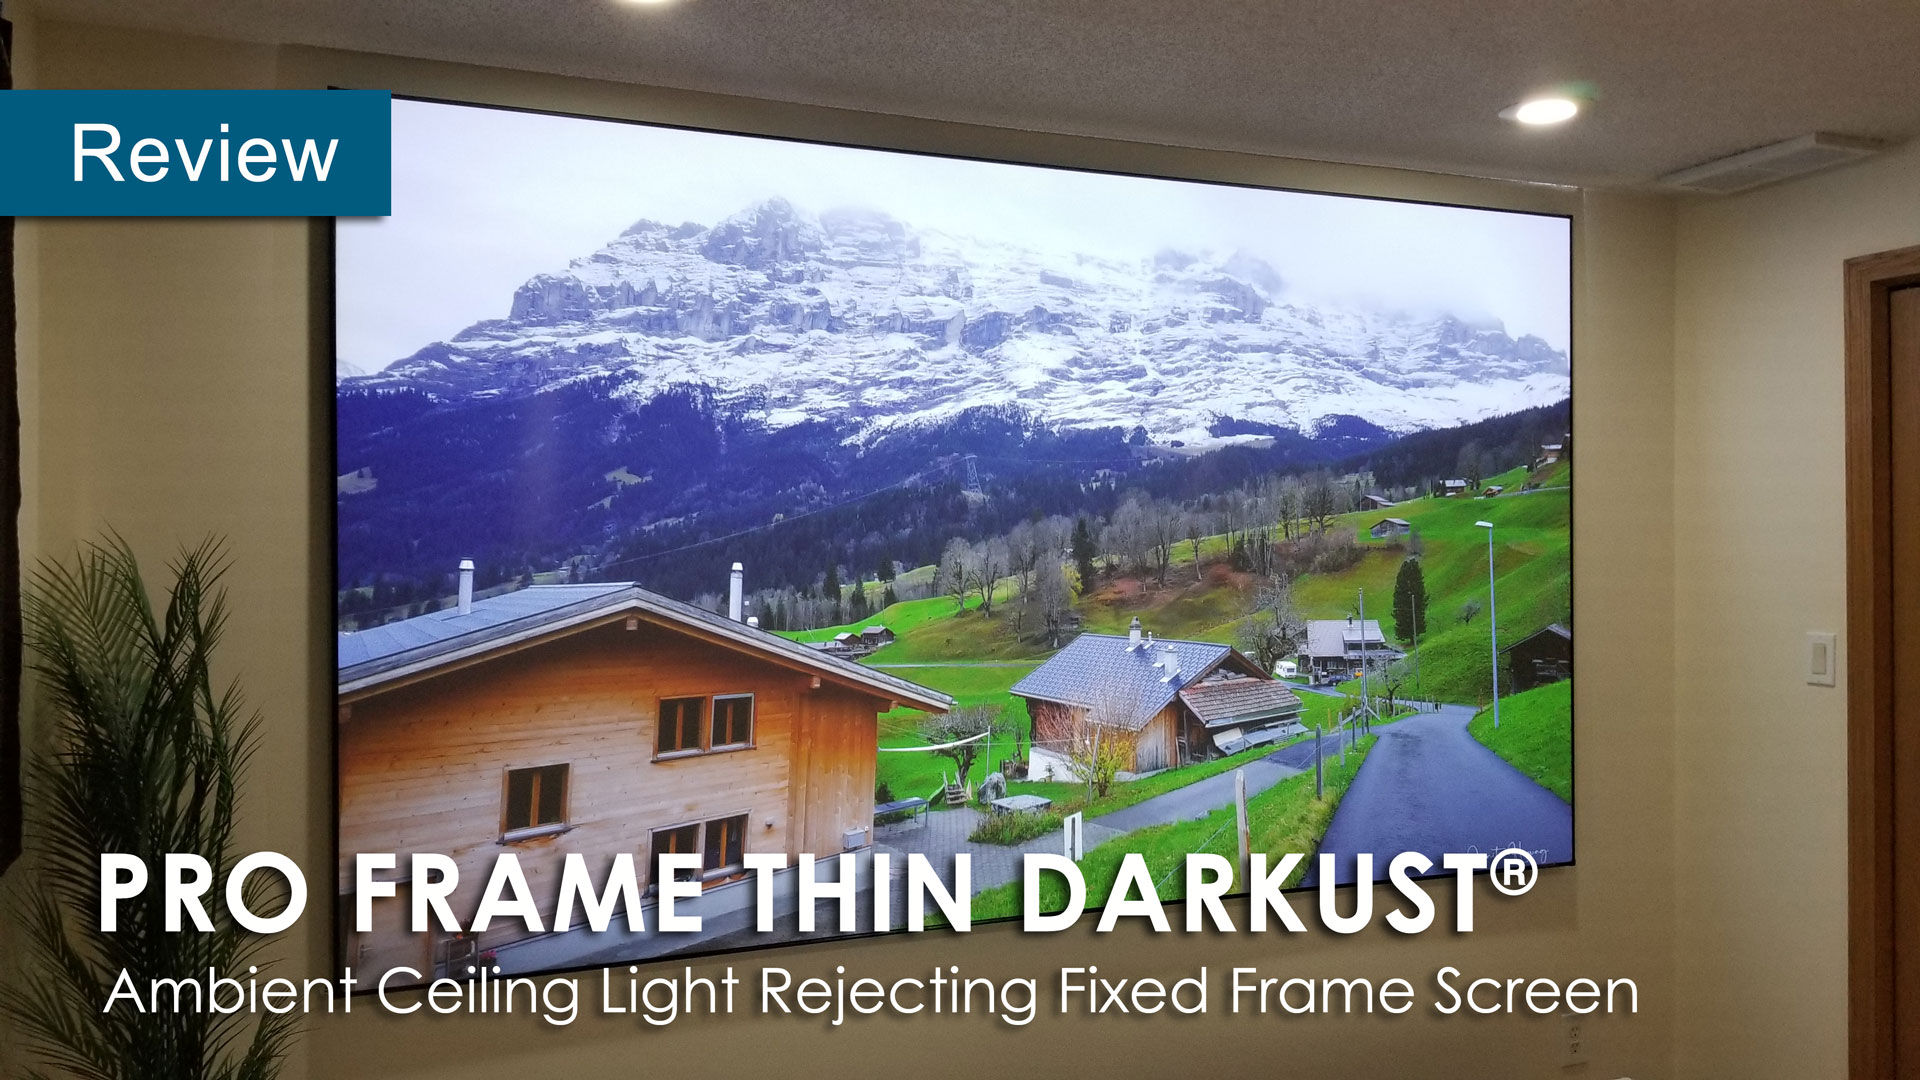 Pro Frame Thin DarkUST® EDGE FREE® Ultra Short Throw Fixed Frame Projector Screen